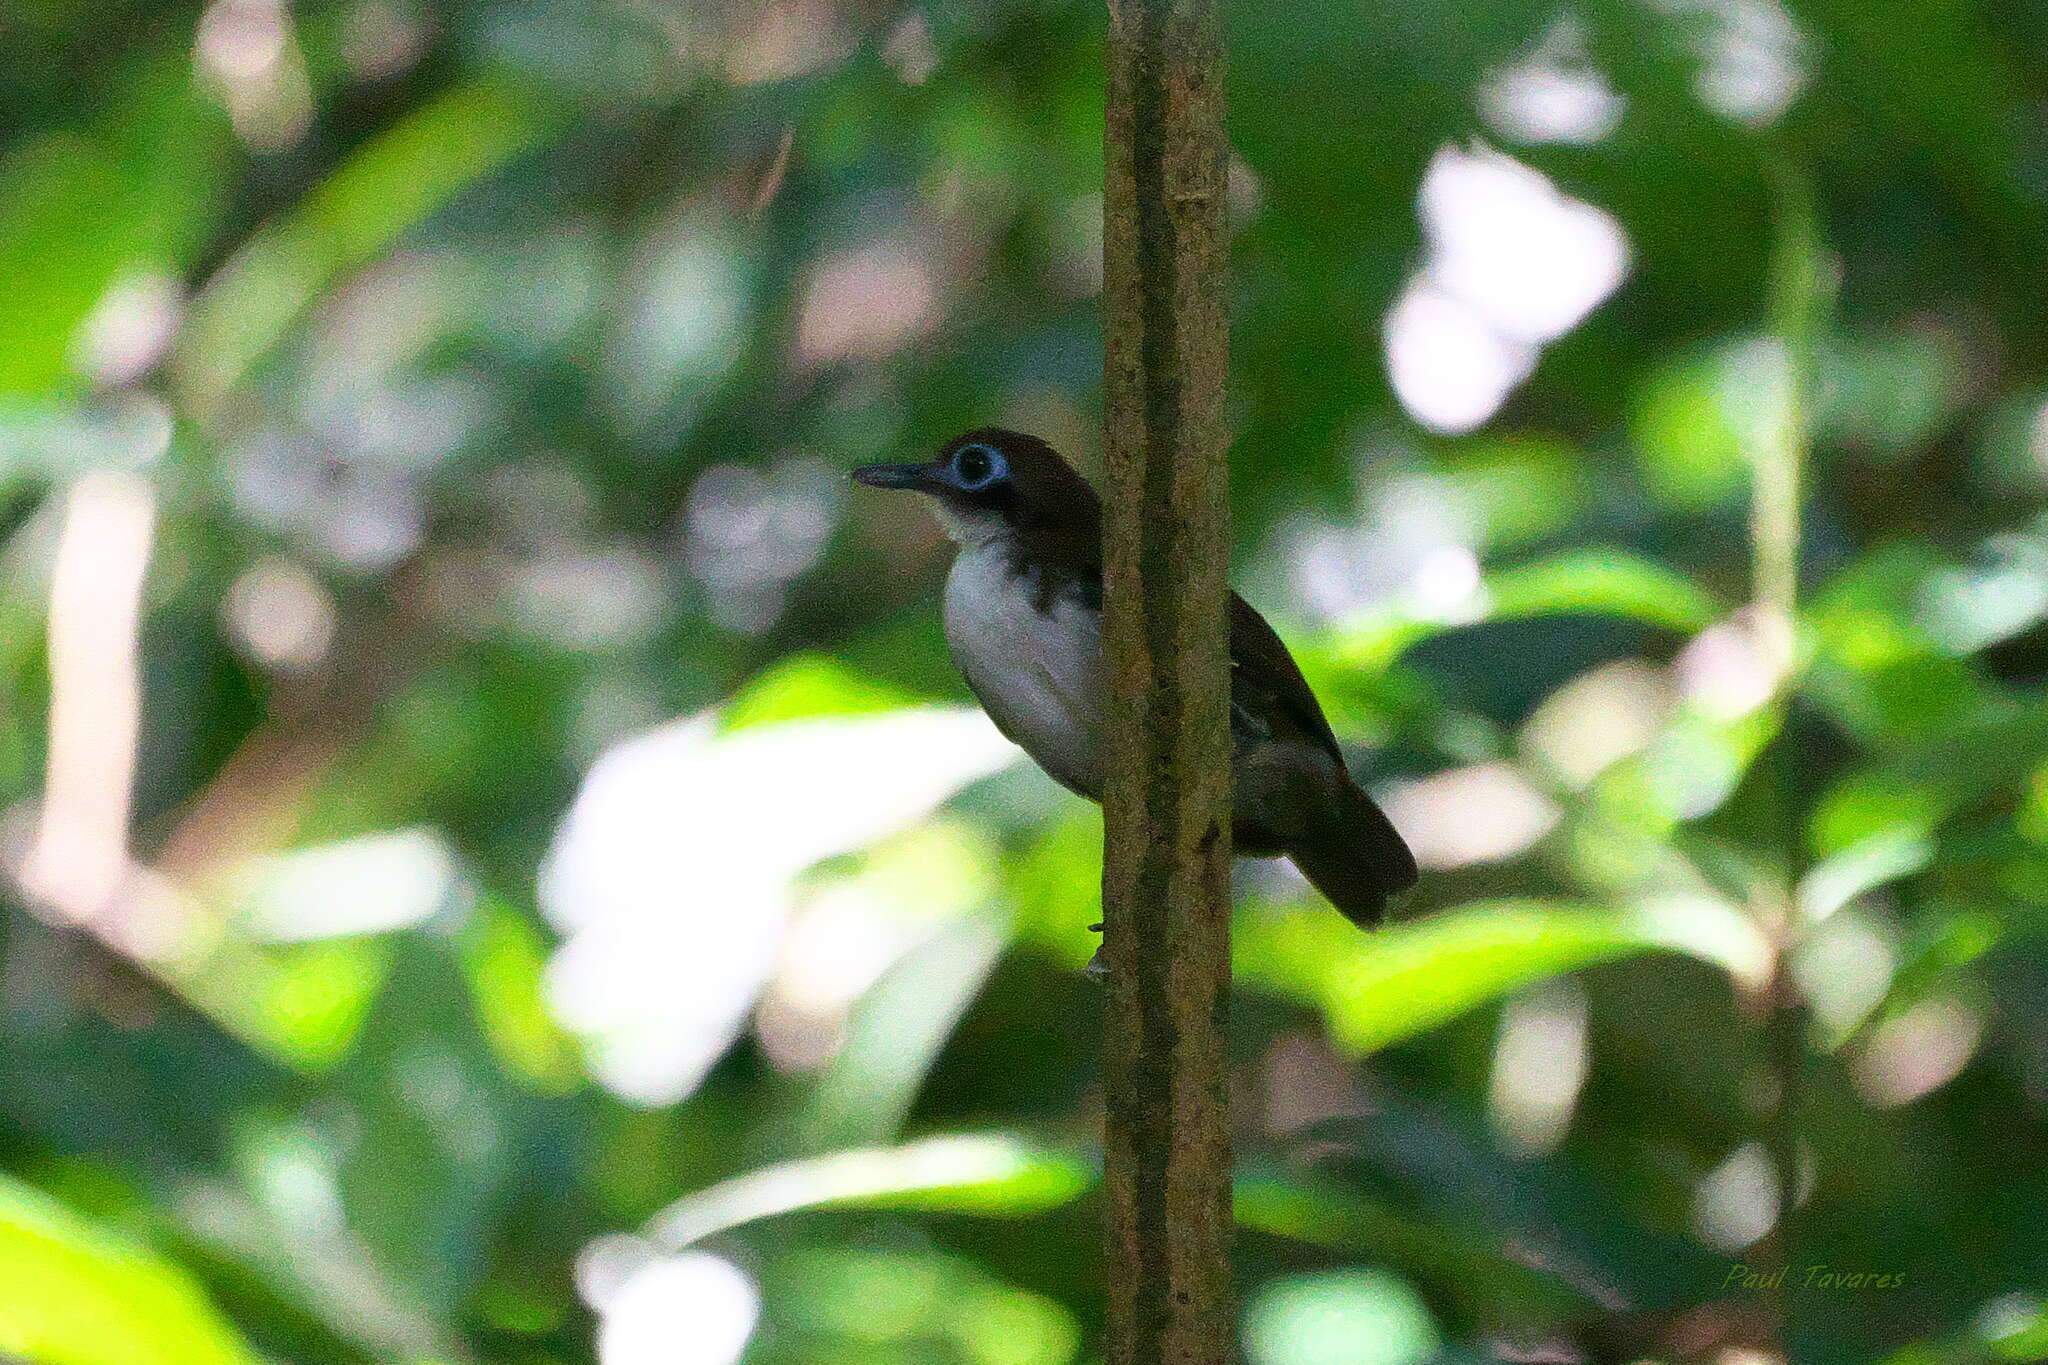 Image of Bicolored Antbird